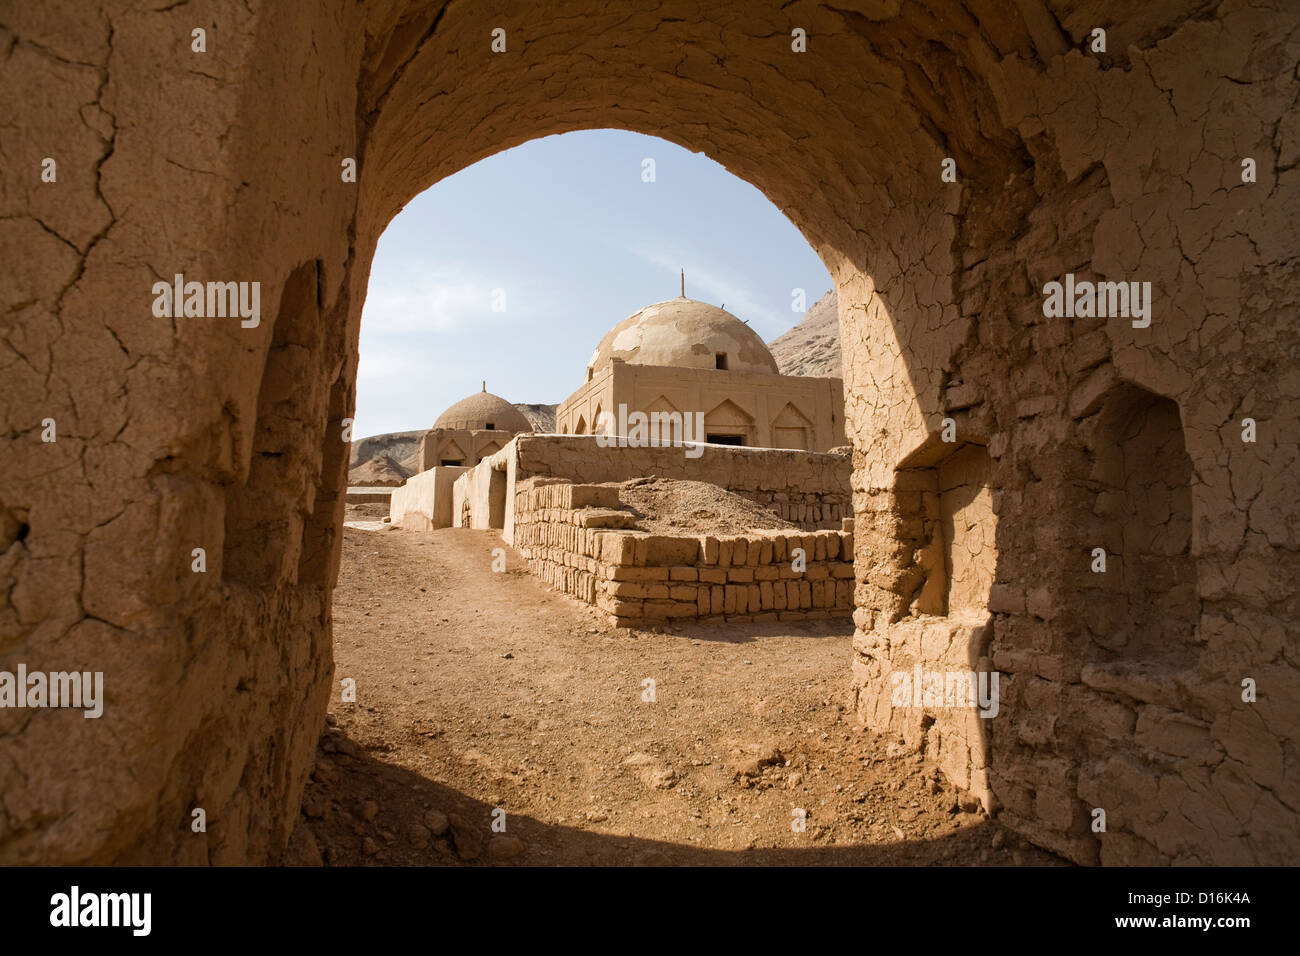 Tombs near Turfan, along the Silkroad, Xinjiang Province, Uygur Autonomous Region, China Stock Photo